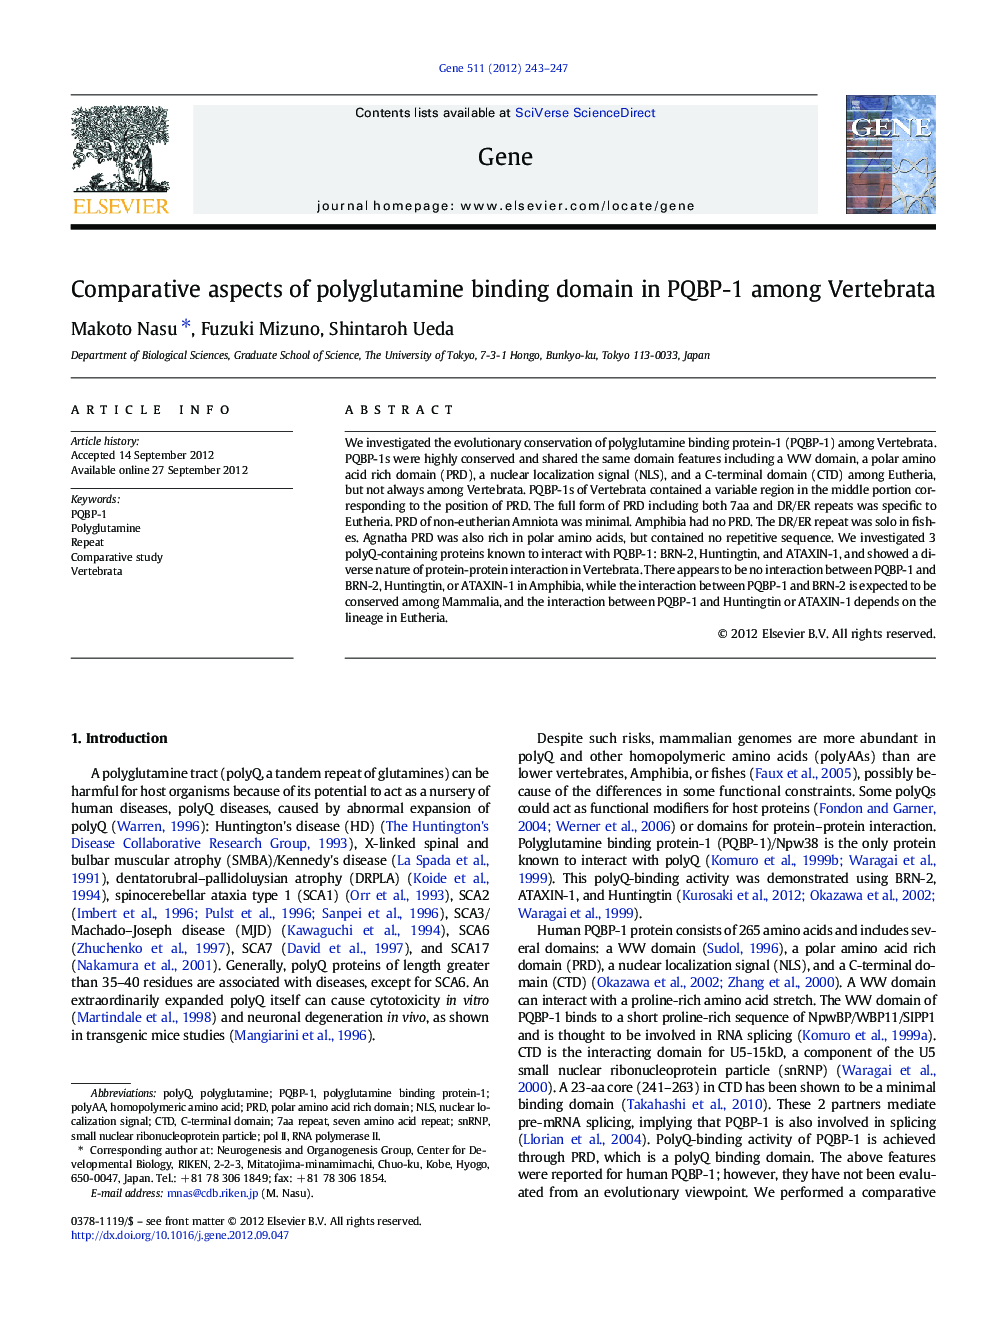 Comparative aspects of polyglutamine binding domain in PQBP-1 among Vertebrata